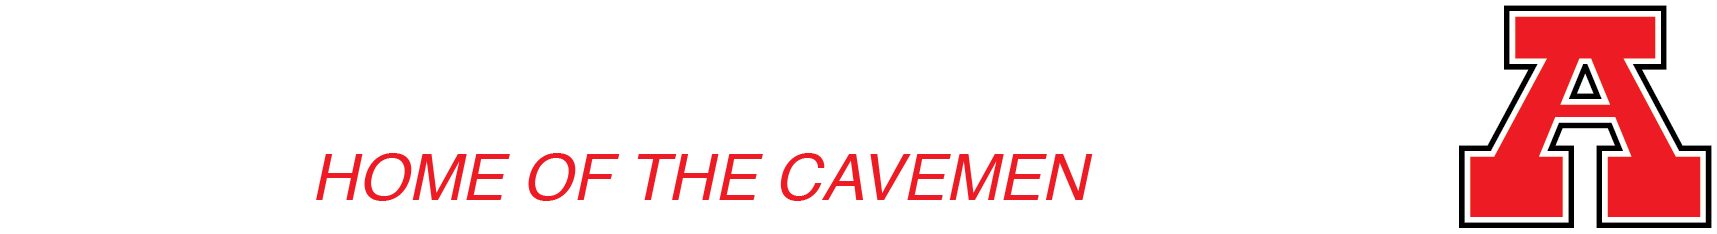 Afhs Logo - American Fork High School – P.R.O.U.D. to be a Caveman